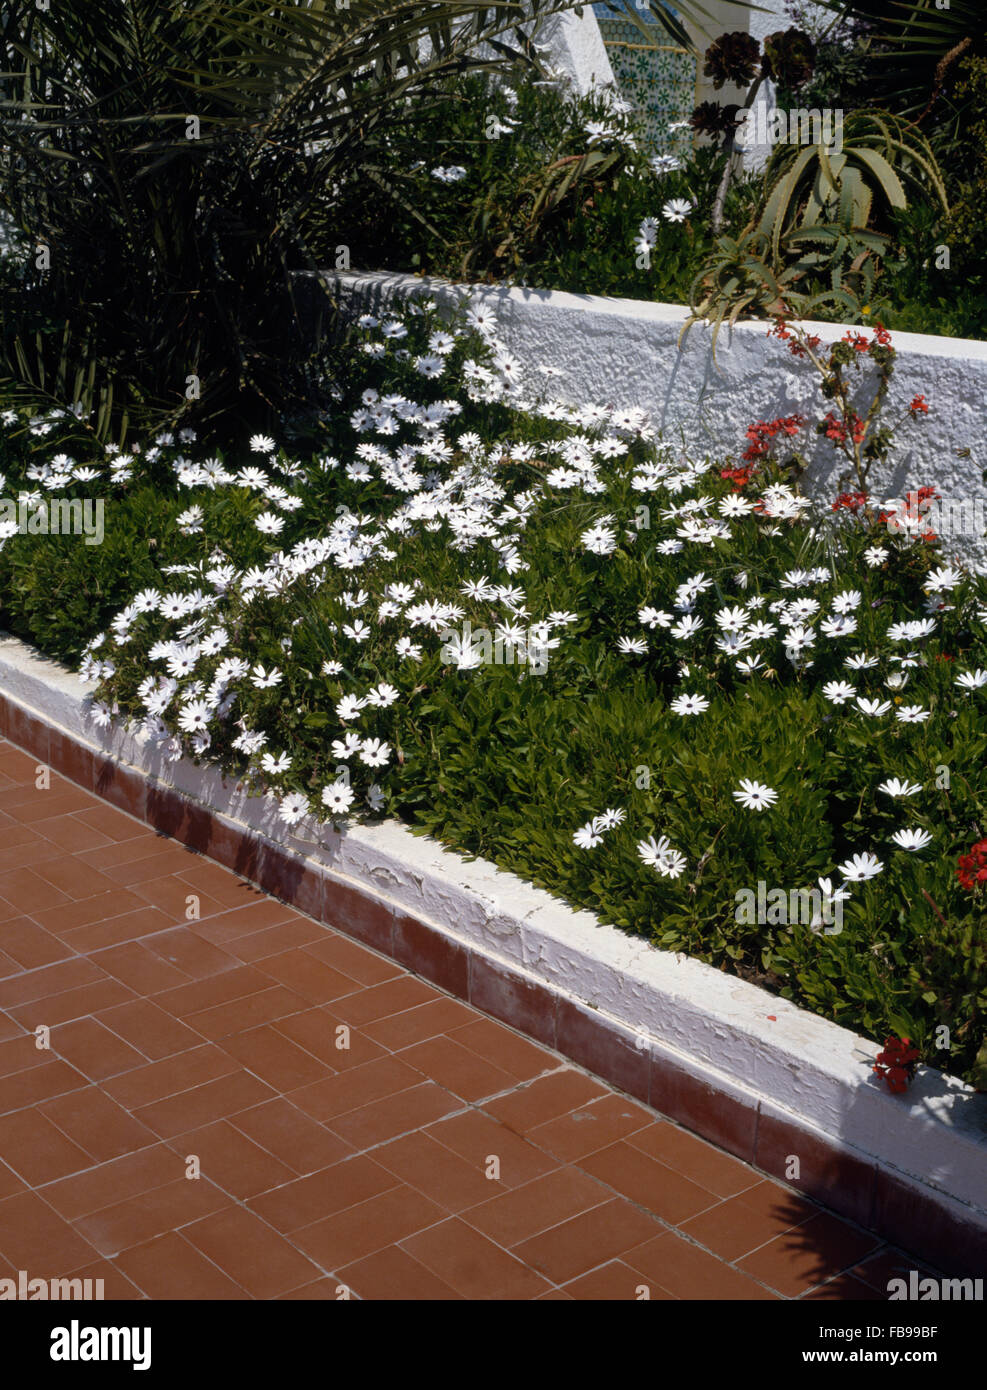 White osteospermum growing in neat border beside tiled path in Moroccan garden Stock Photo